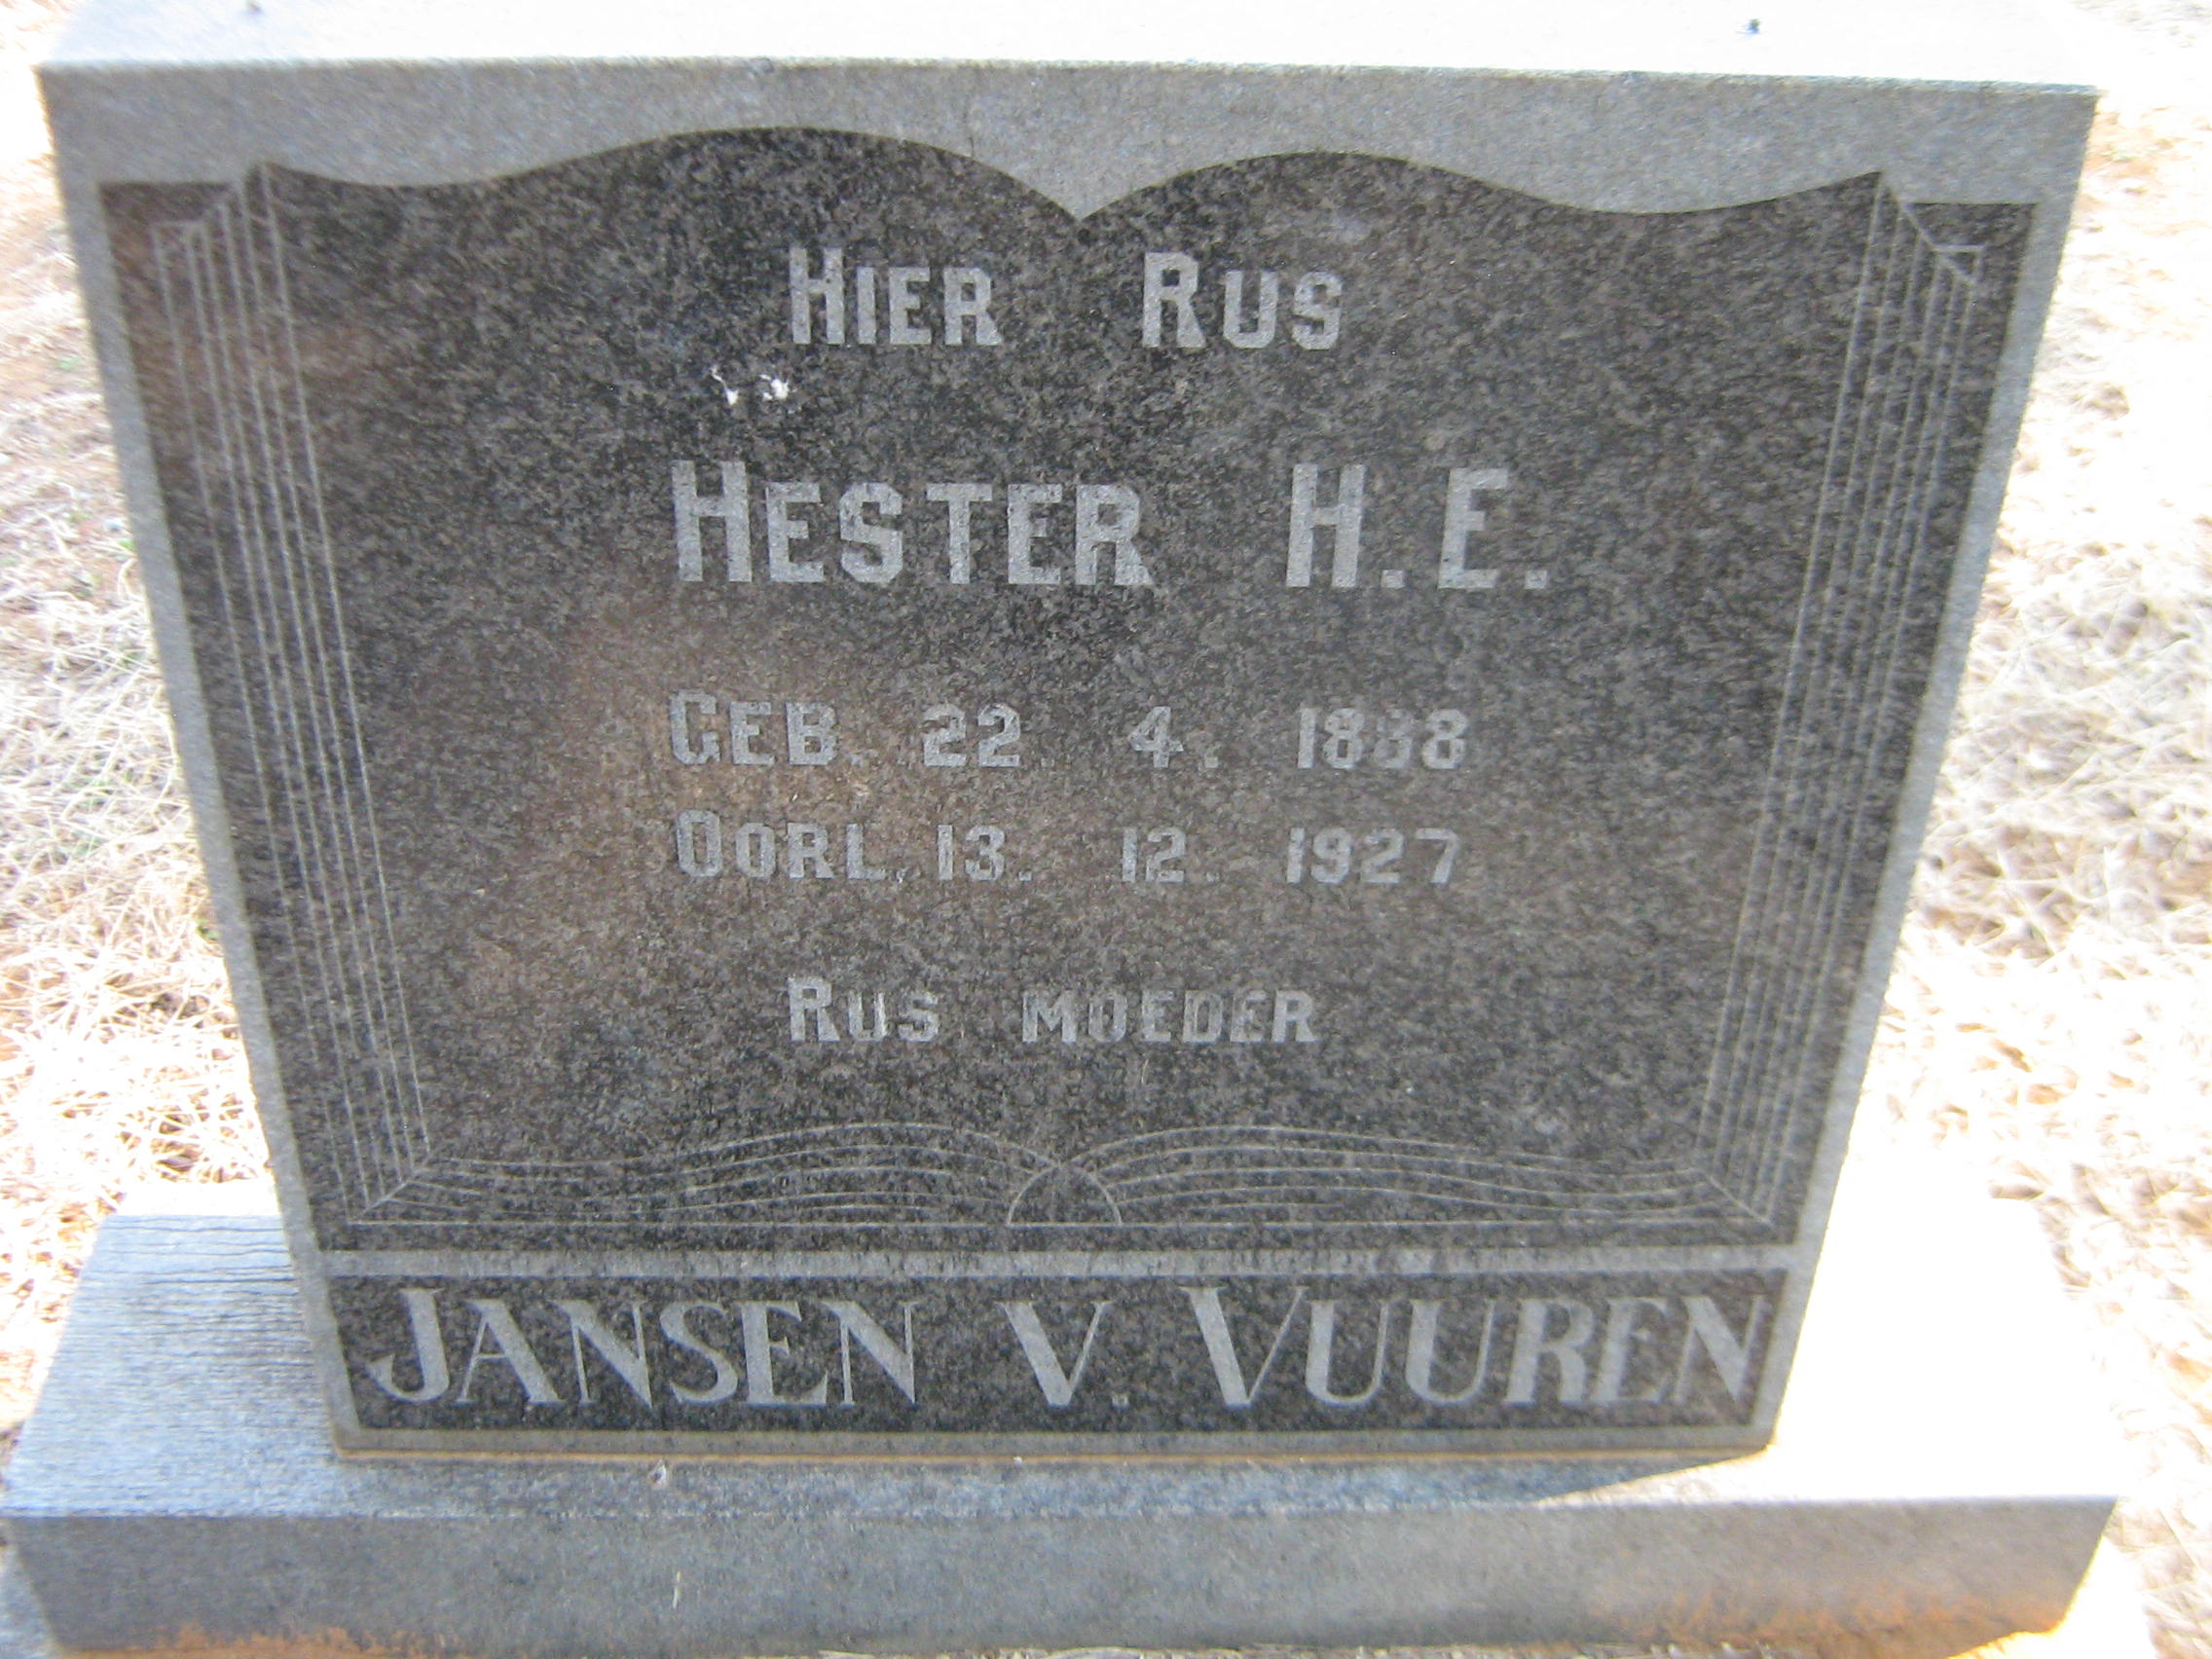 VUUREN Hester H. E., Jansen van 1888-1927